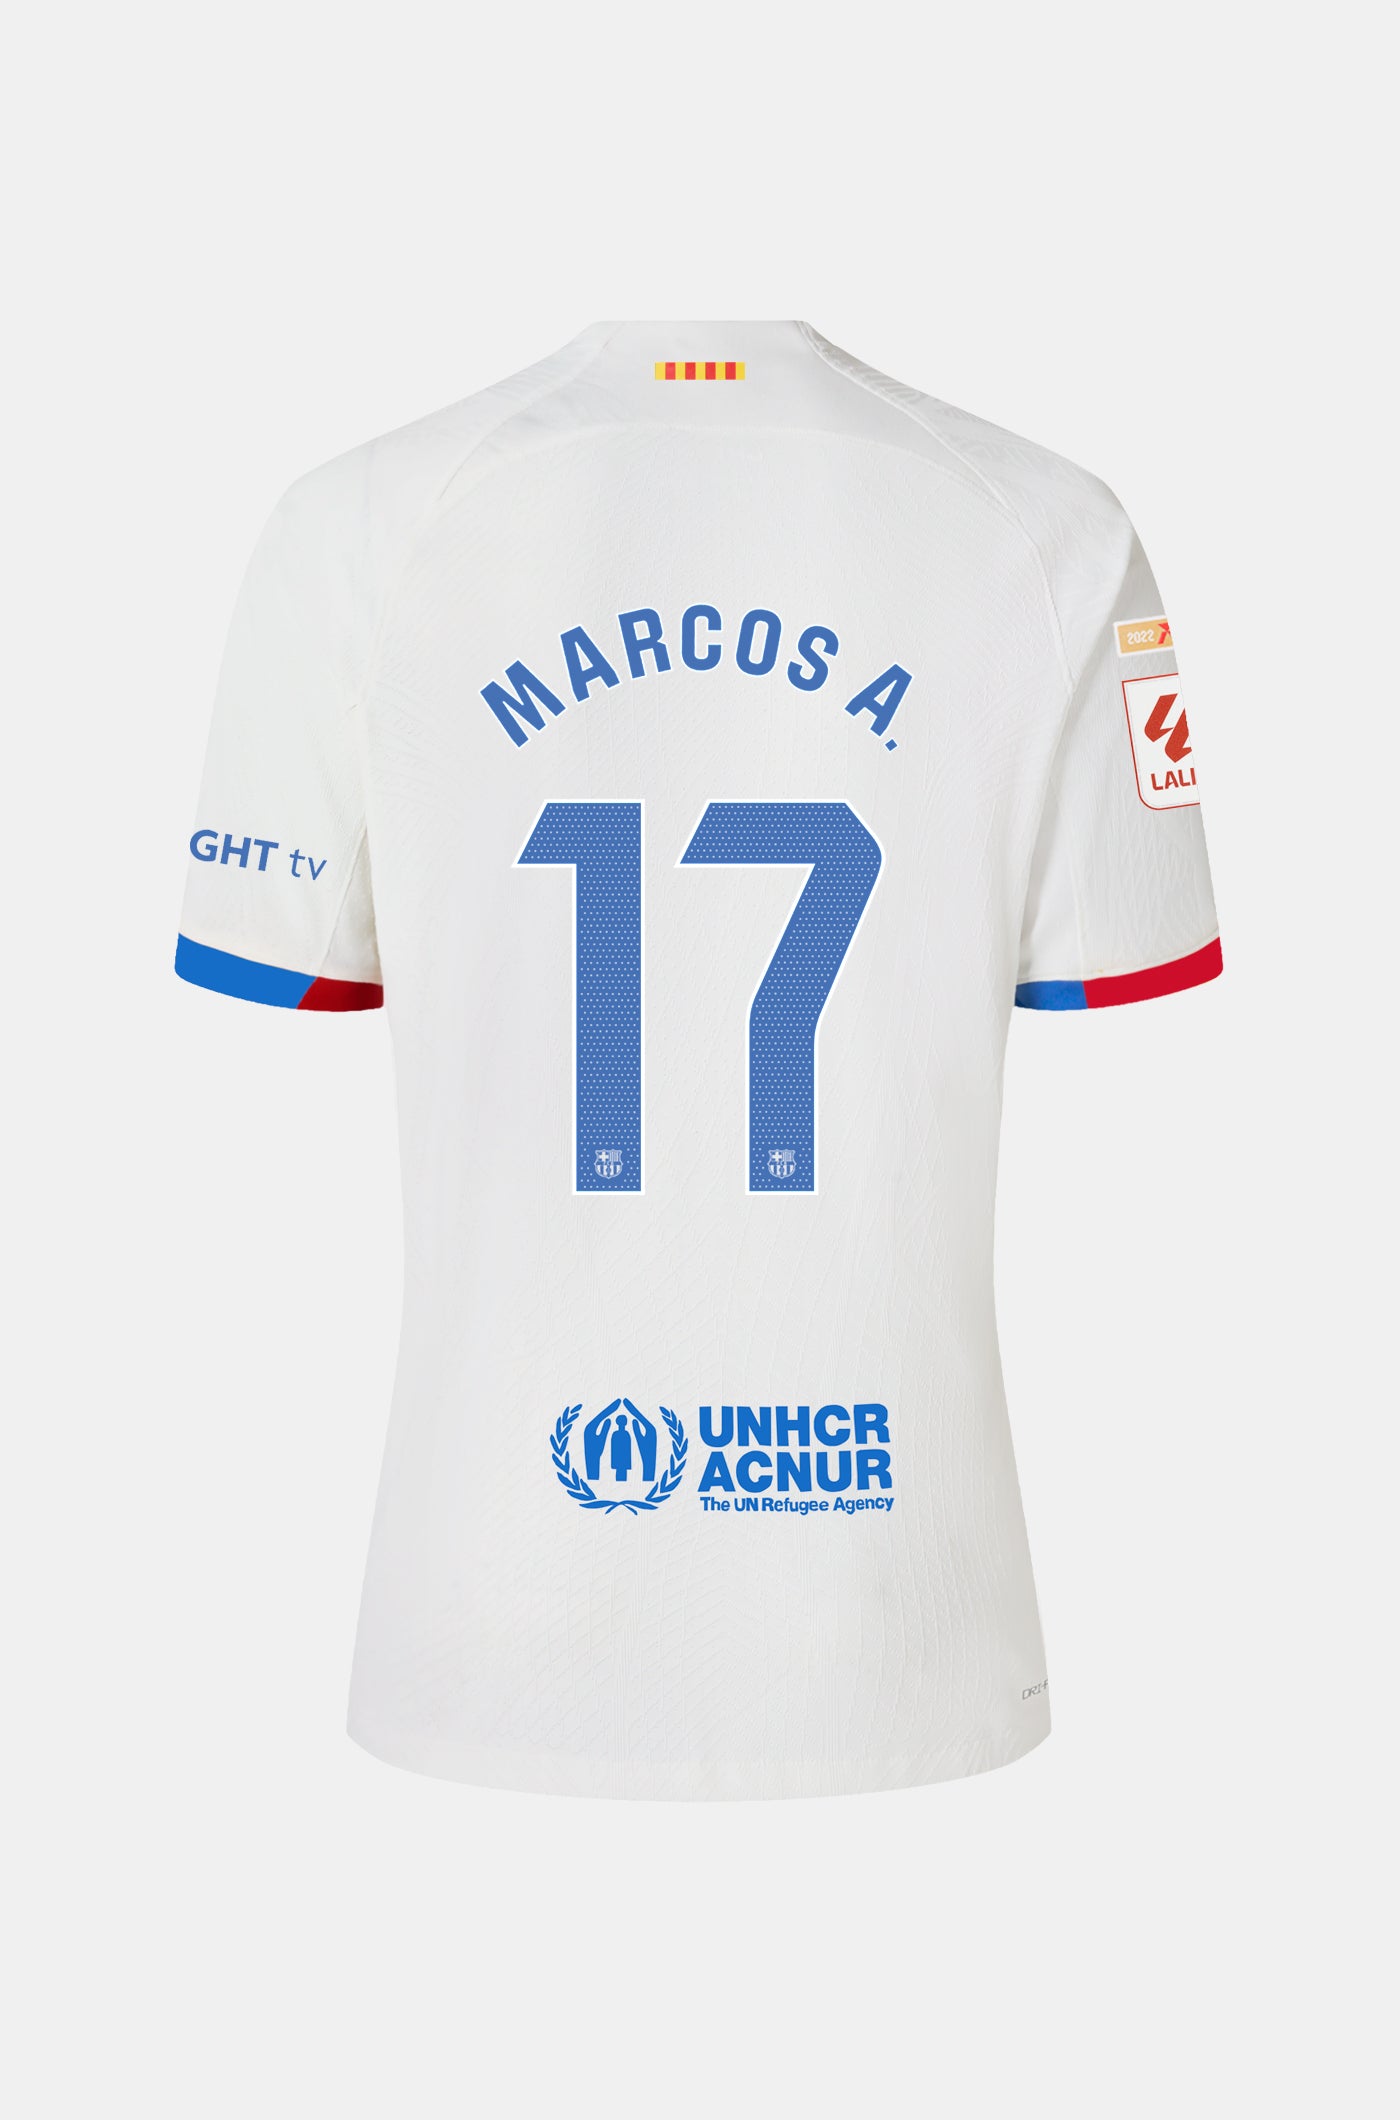 LFP FC Barcelona away shirt 23/24 Player’s Edition  - MARCOS A.